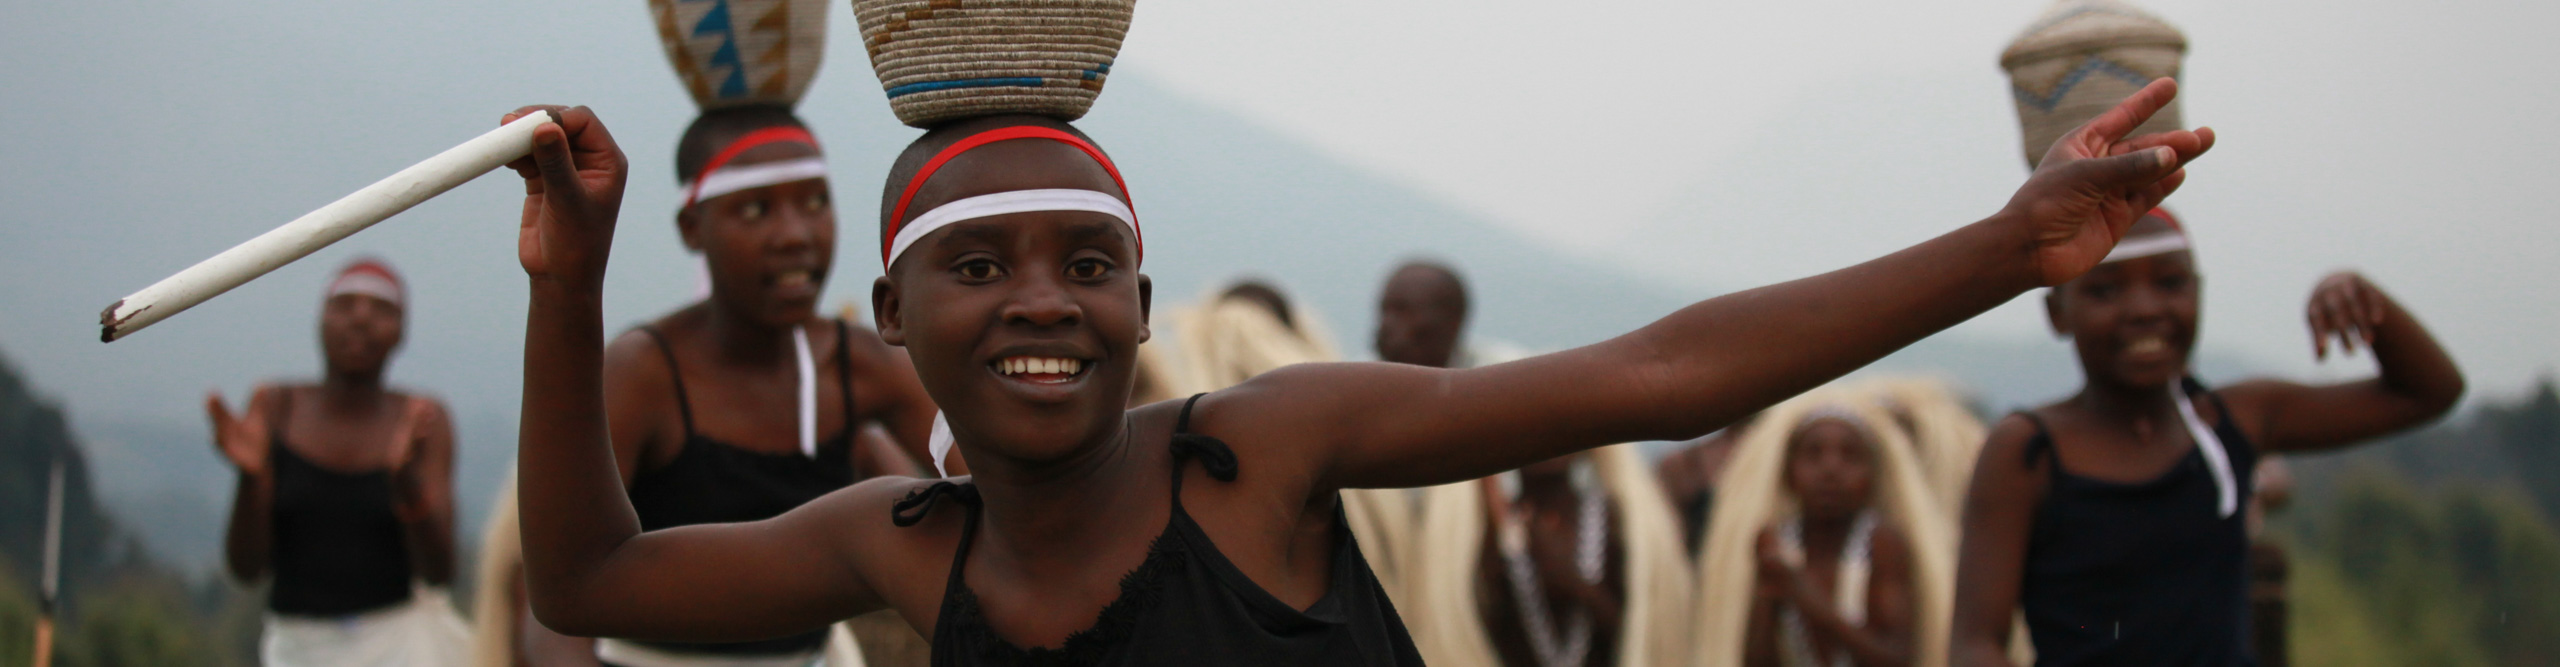 Local dancing at a festival in Kenya, Africa 